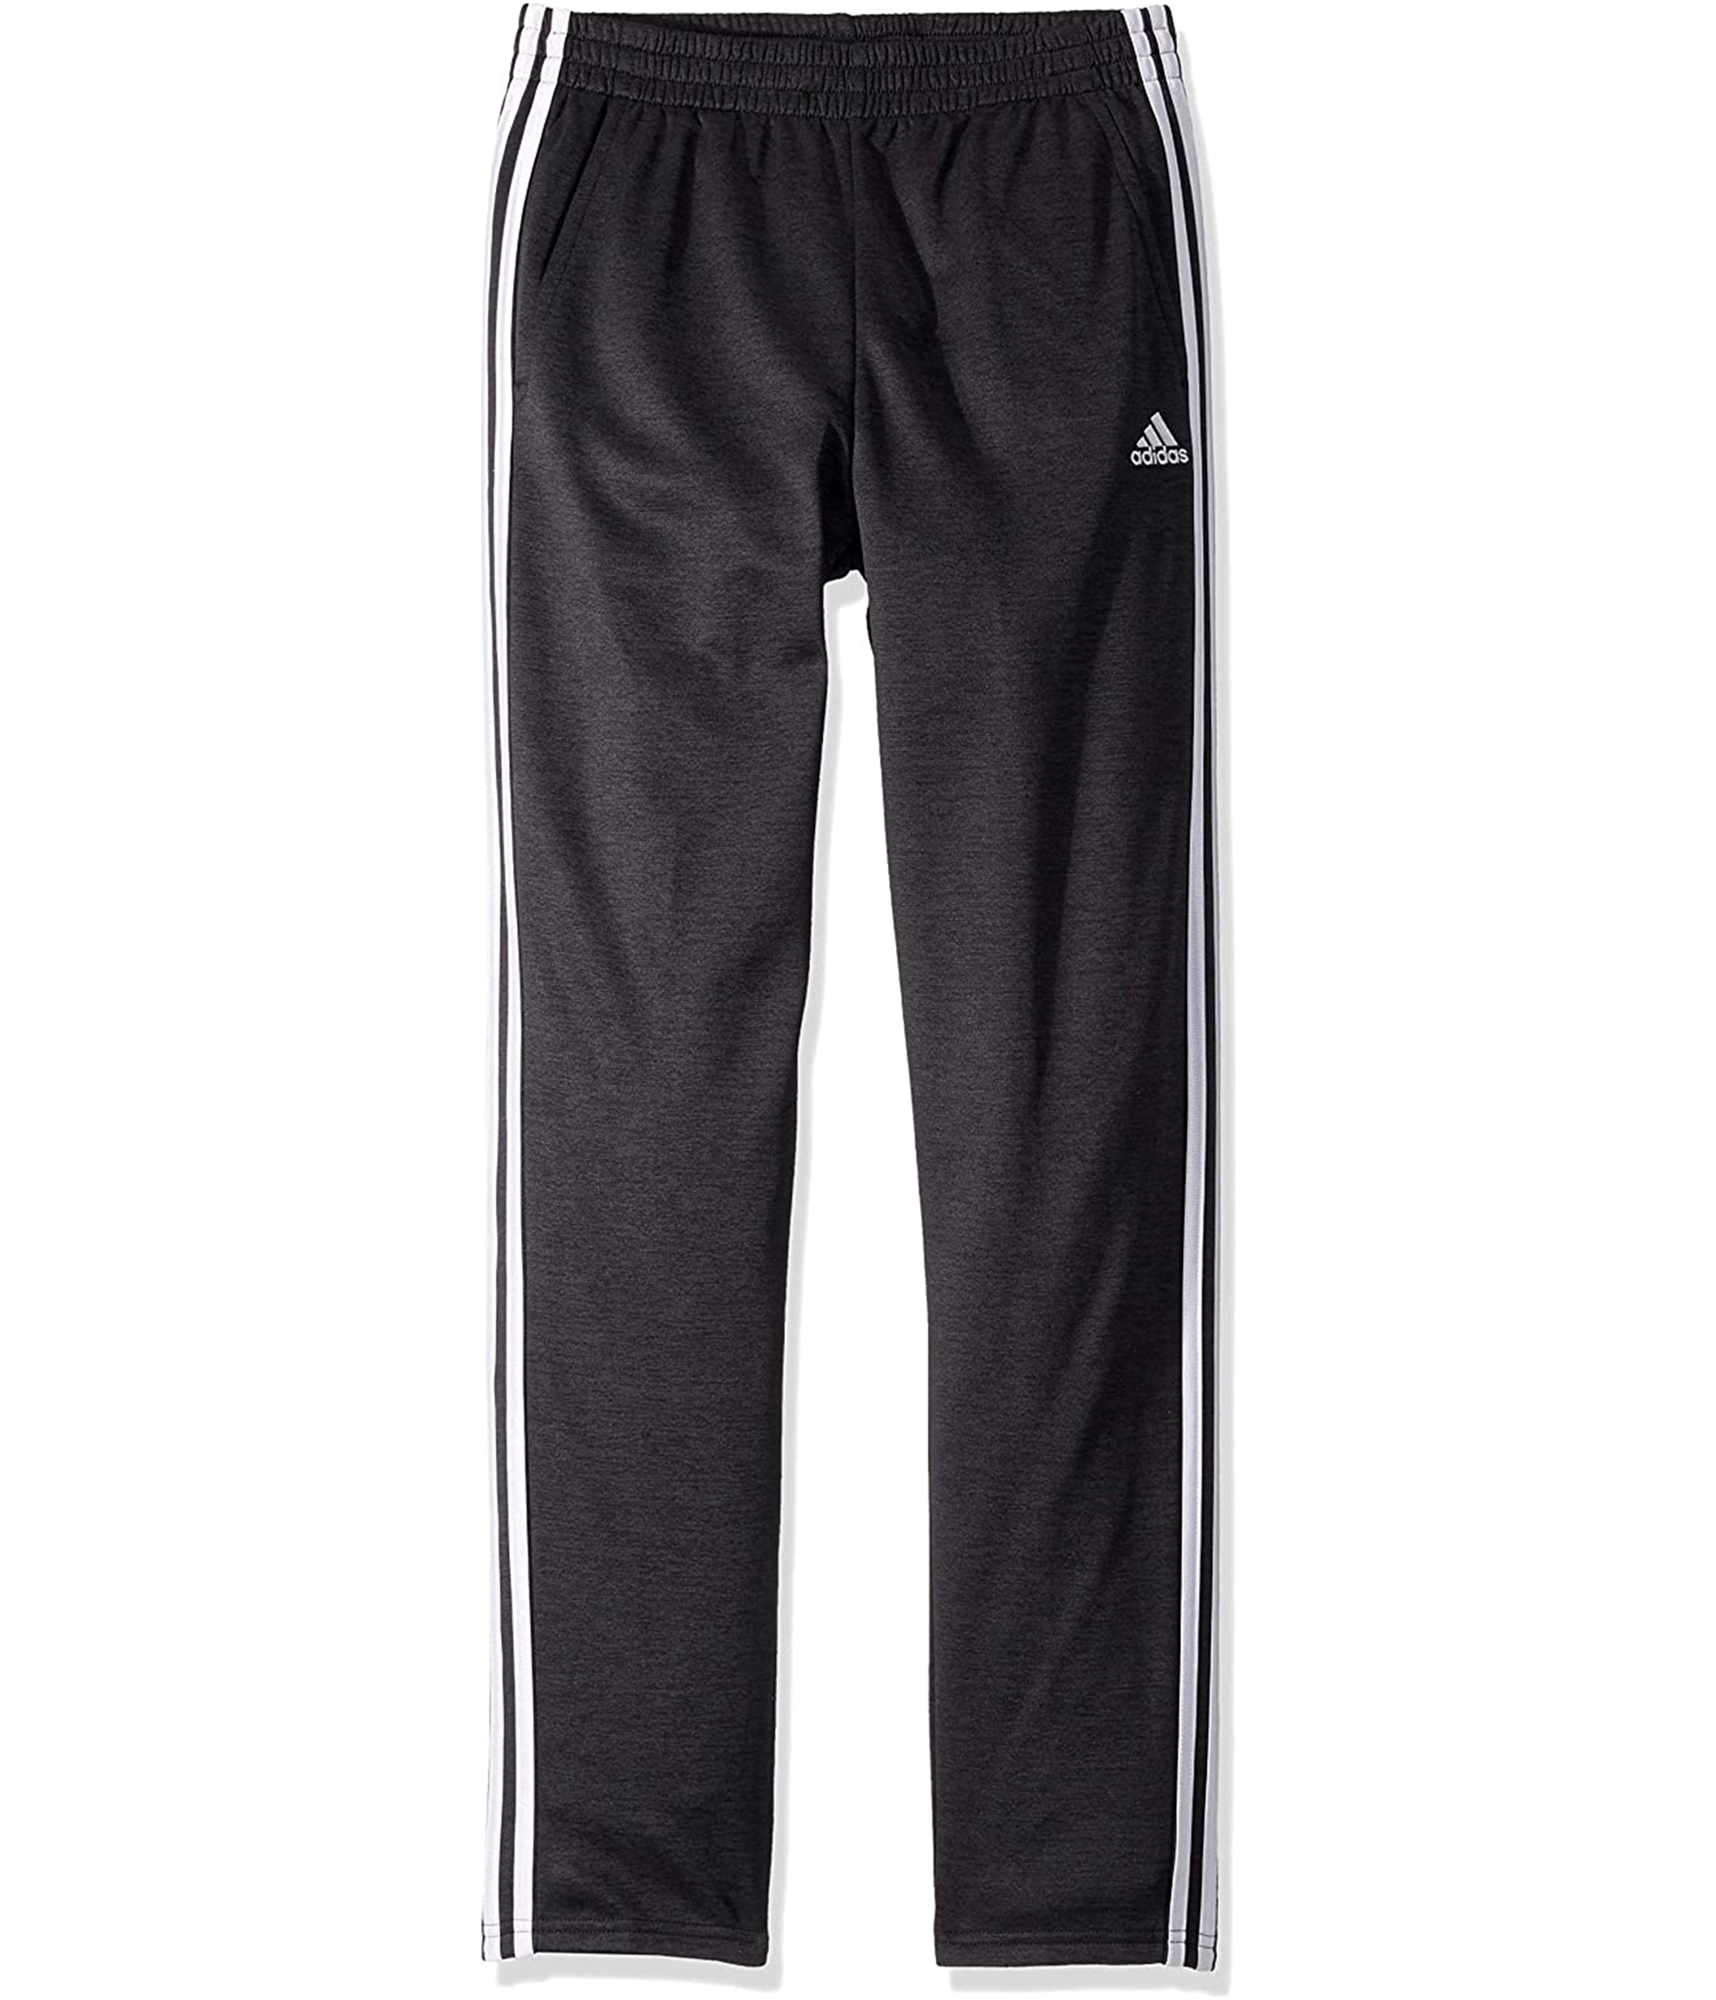 Boys. Adidas Tiro pants | Clothes design, Pant shopping, Fashion trends